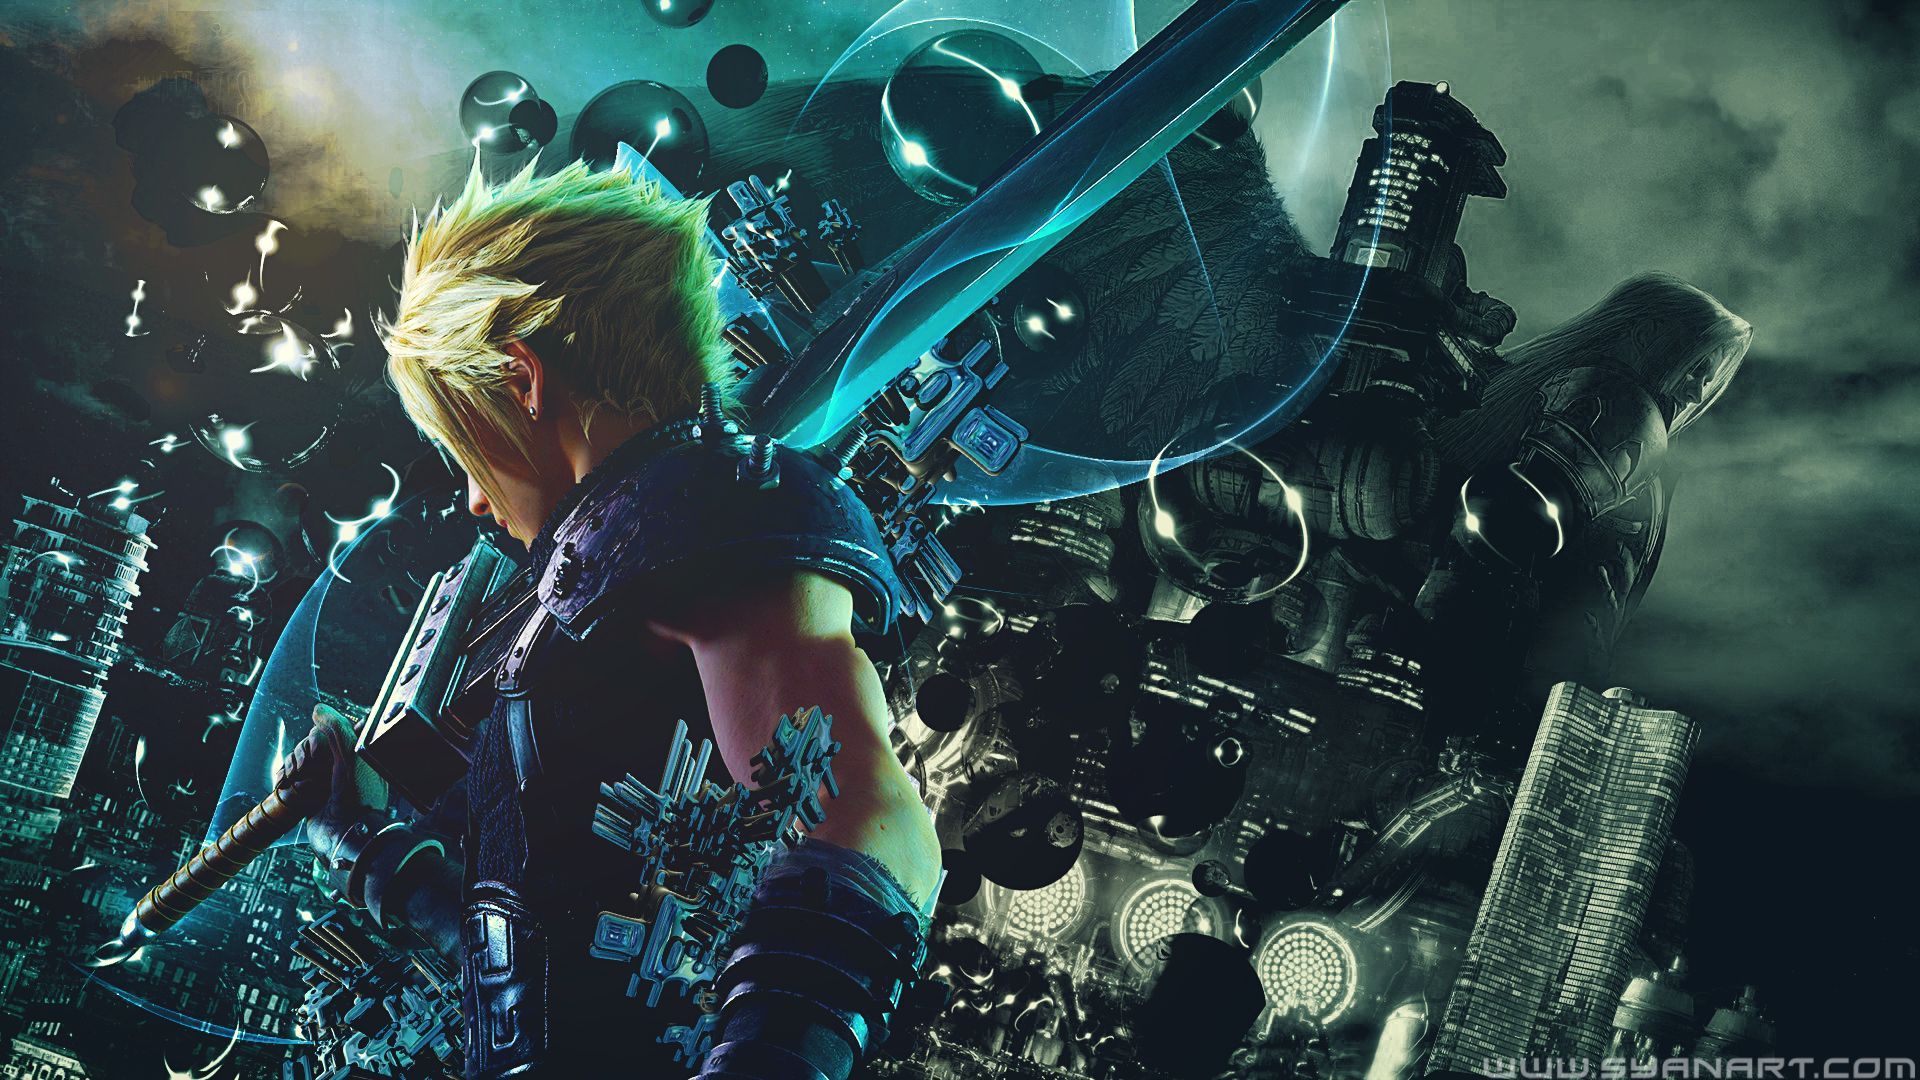 Cool Final Fantasy VII Remake Wallpaper Free Cool Final Fantasy VII Remake Background